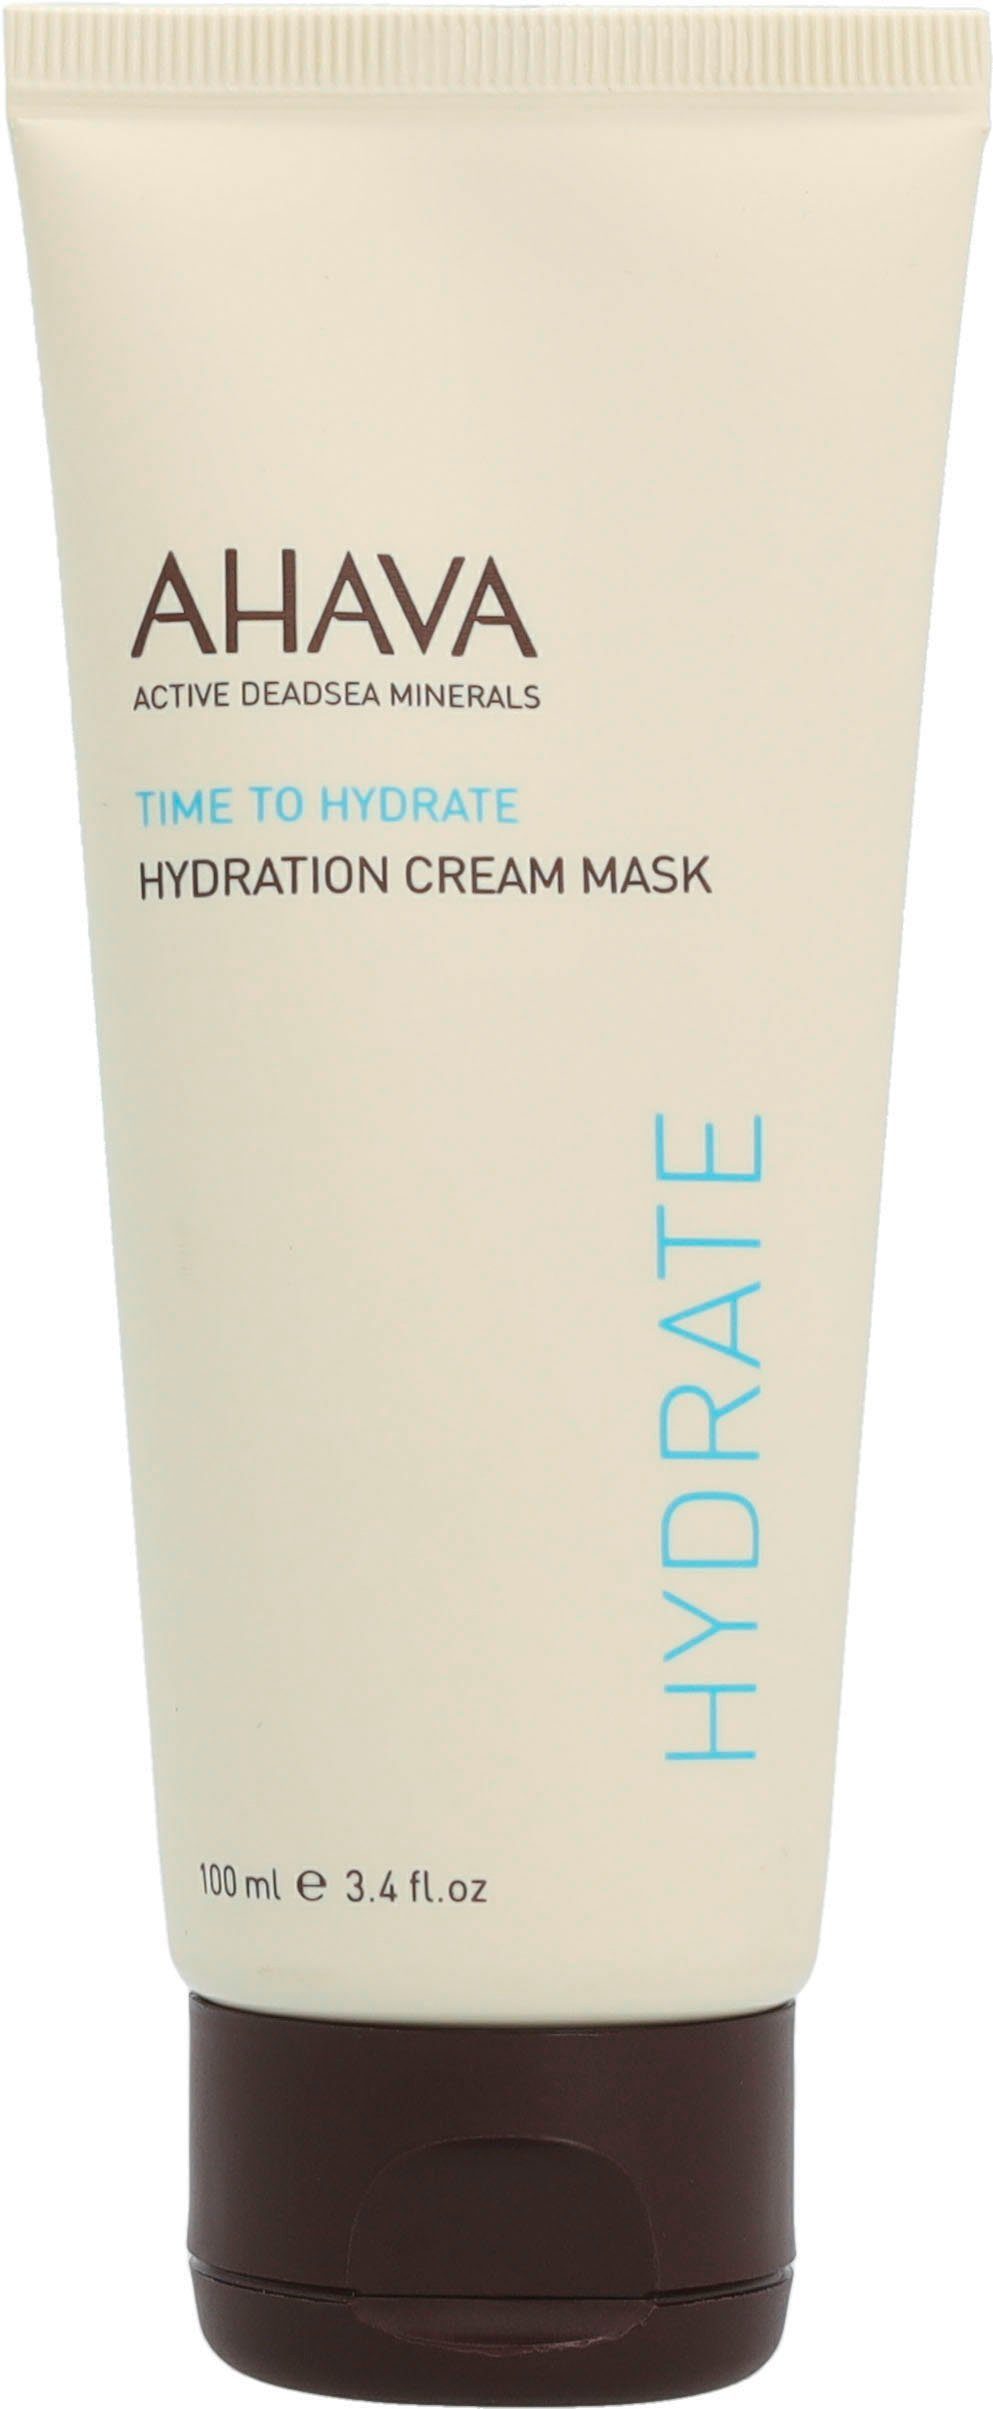 Hydration Gesichtsmaske AHAVA Time Mask Cream Hydrate To